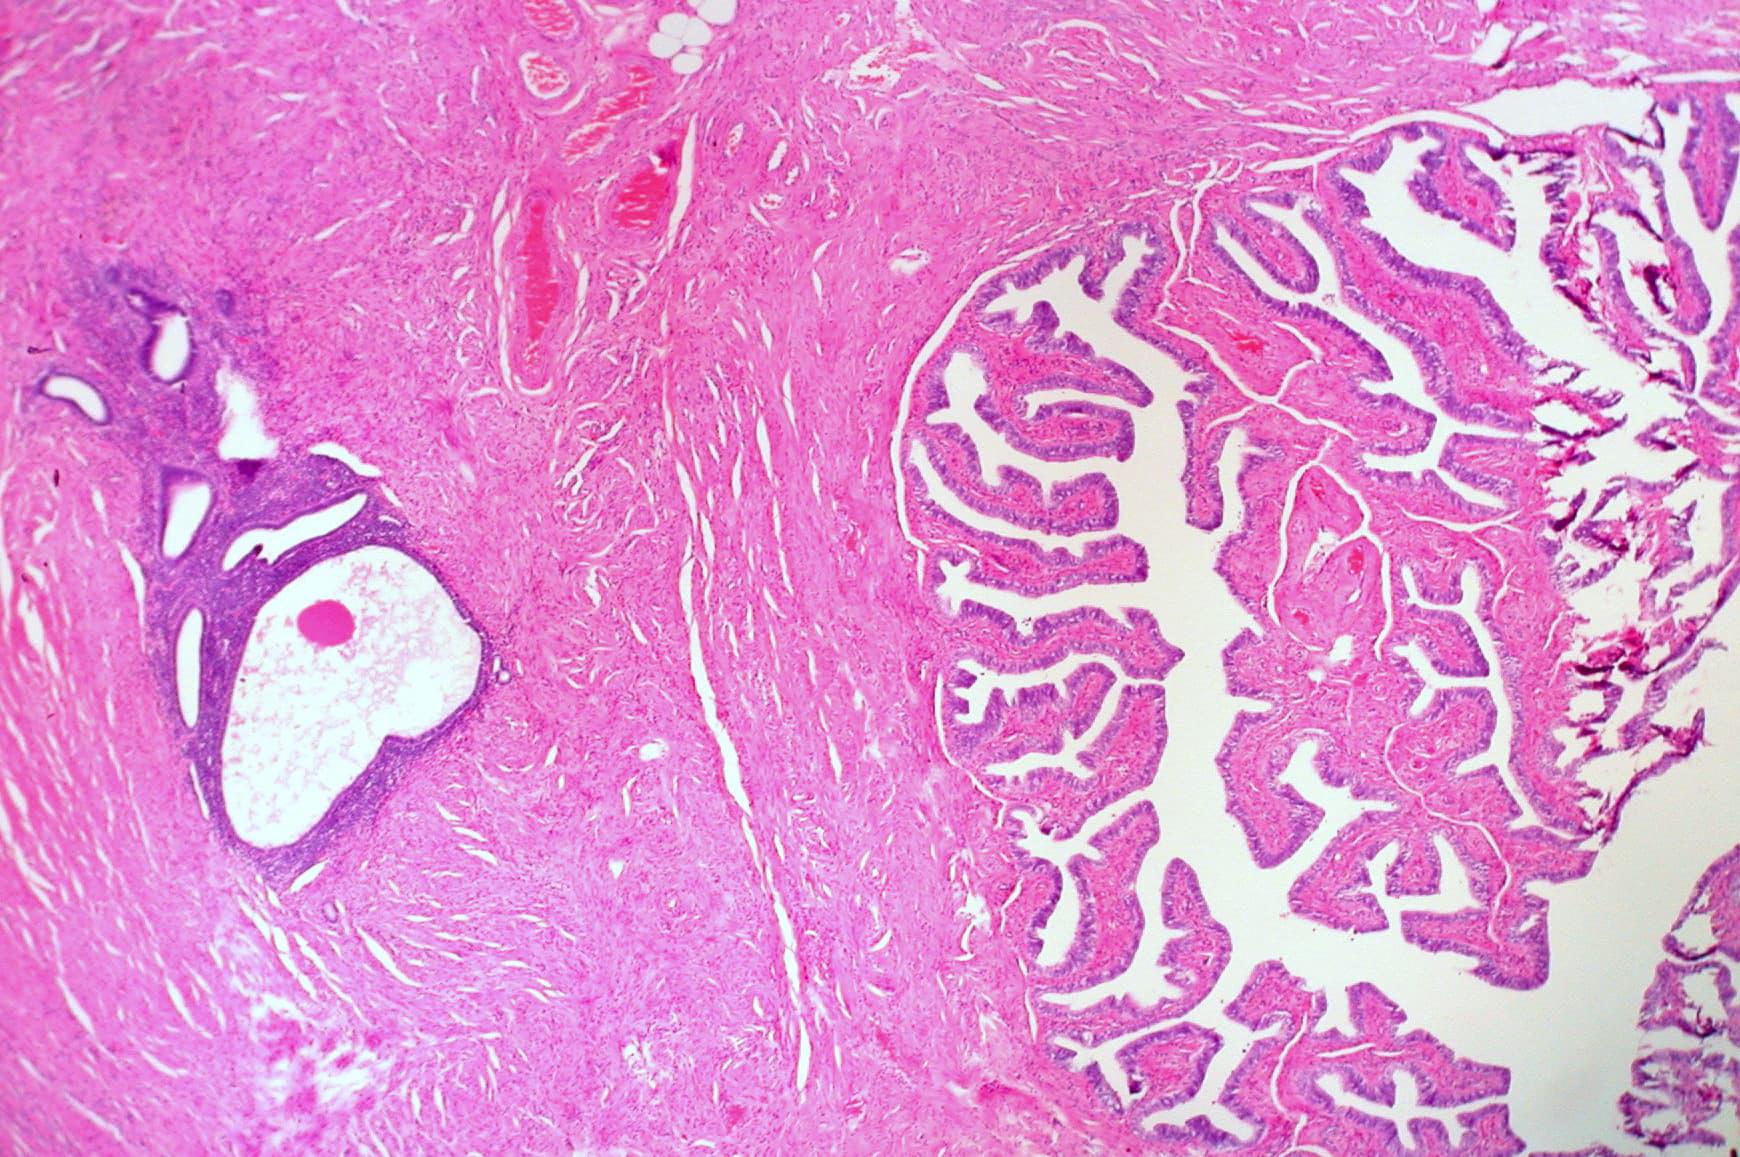 Endometriosis in Wall of Fallopian Tube | Image by Ed Uthman (Flickr)